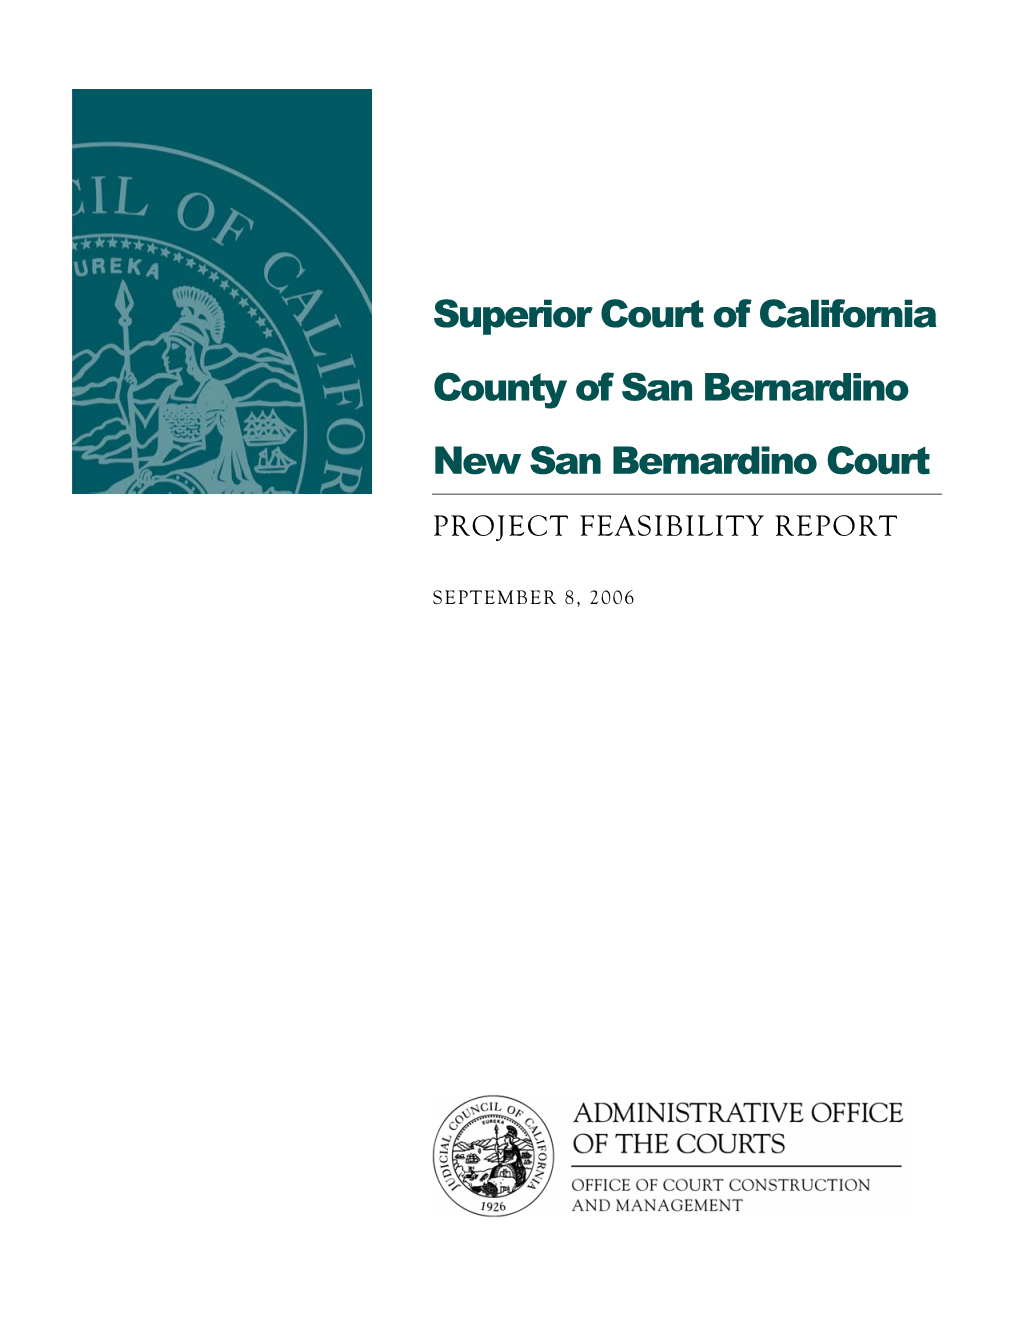 Superior Court of California County of San Bernardino New San